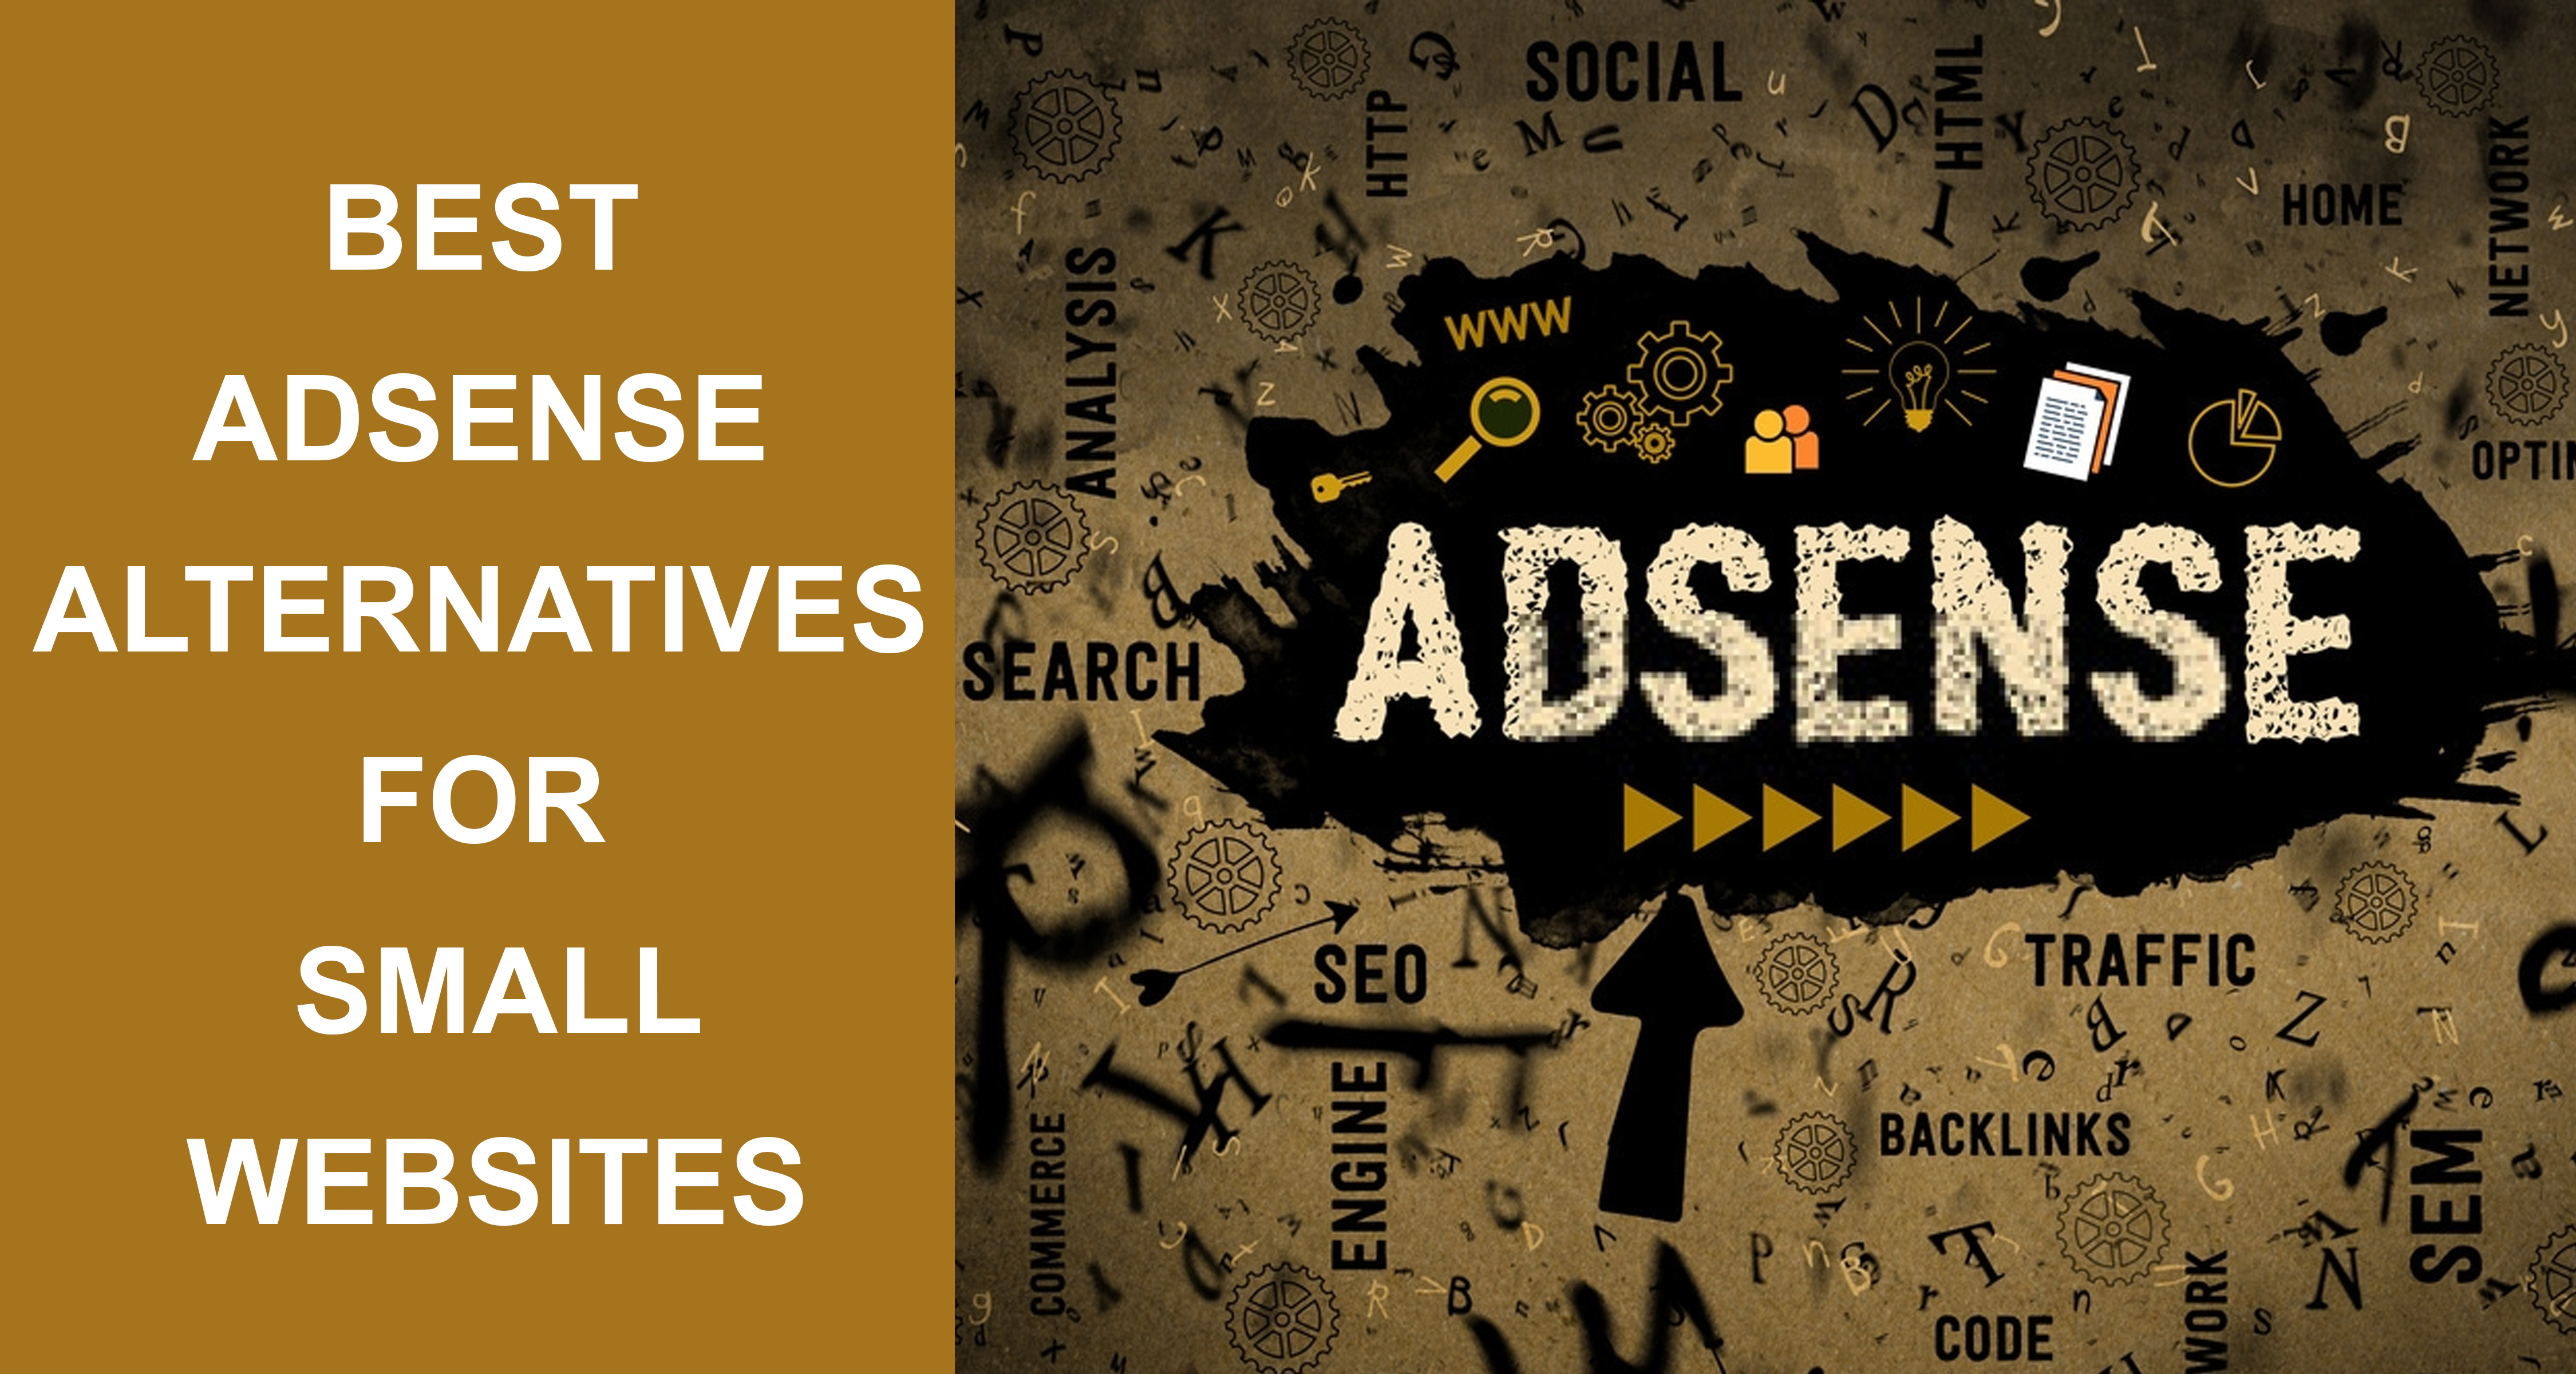 Best Adsense Alternatives For Small Websites